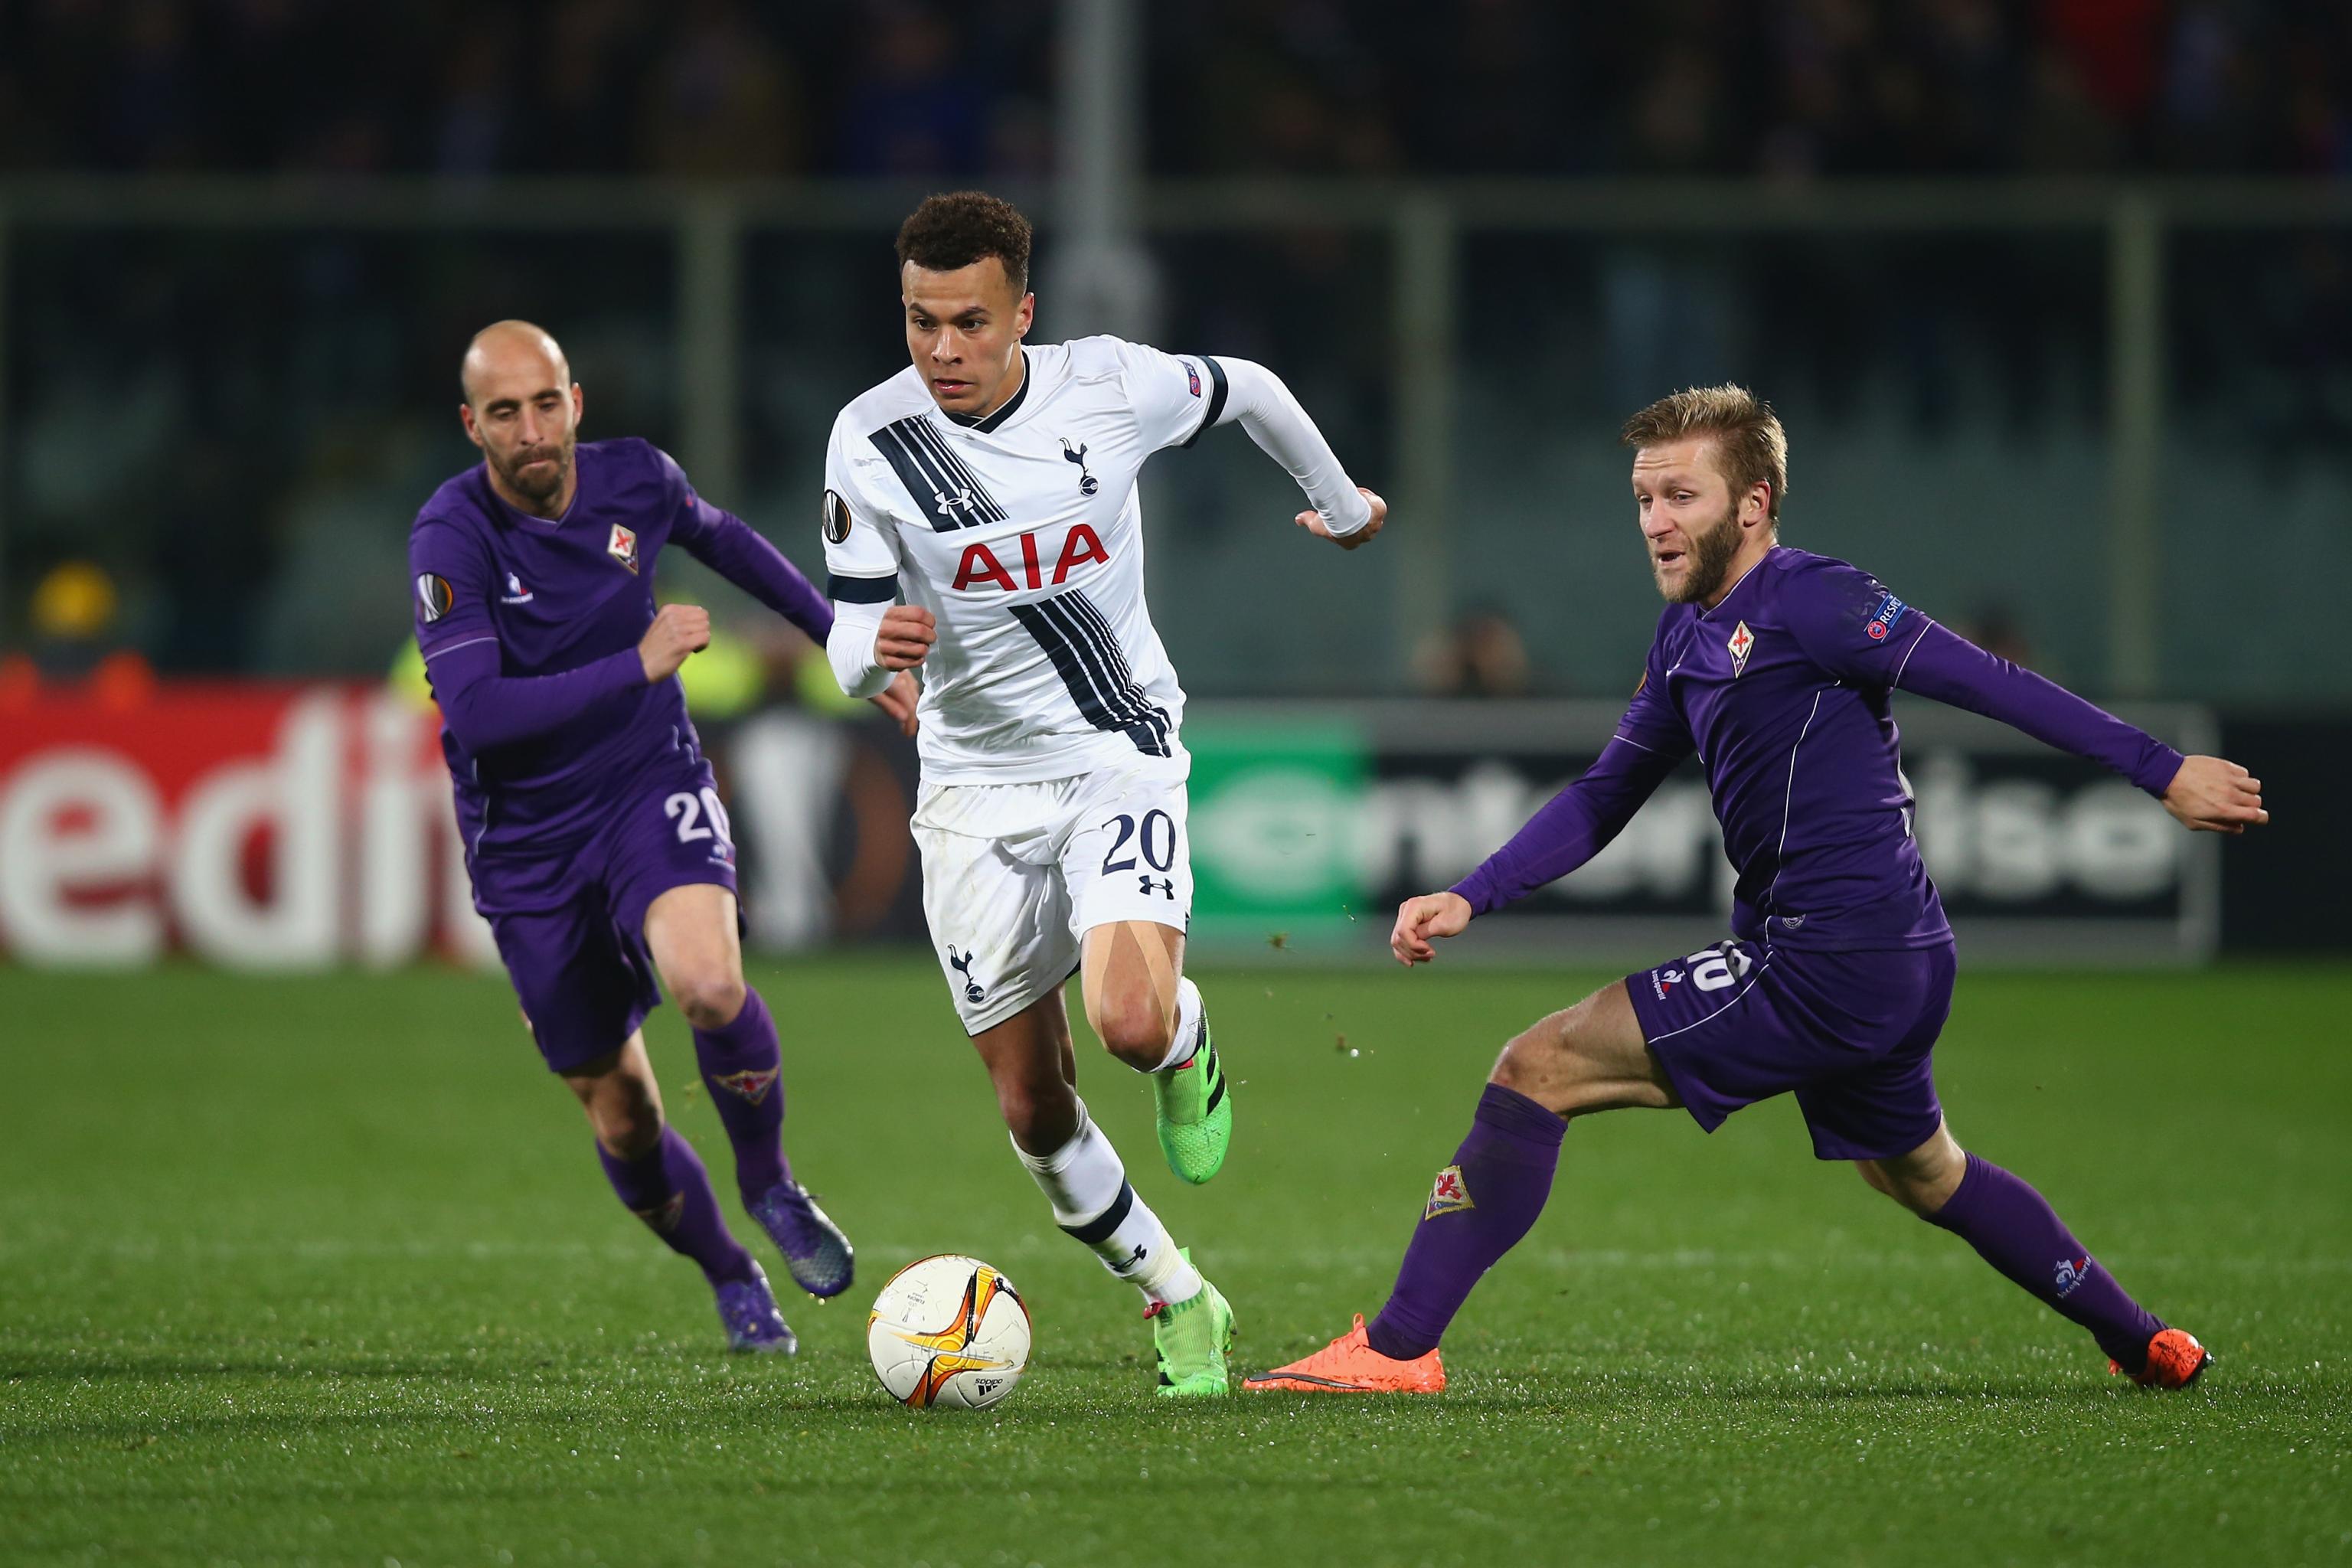 Fiorentina Vs. Tottenham 2015: Europa League Preview and How to